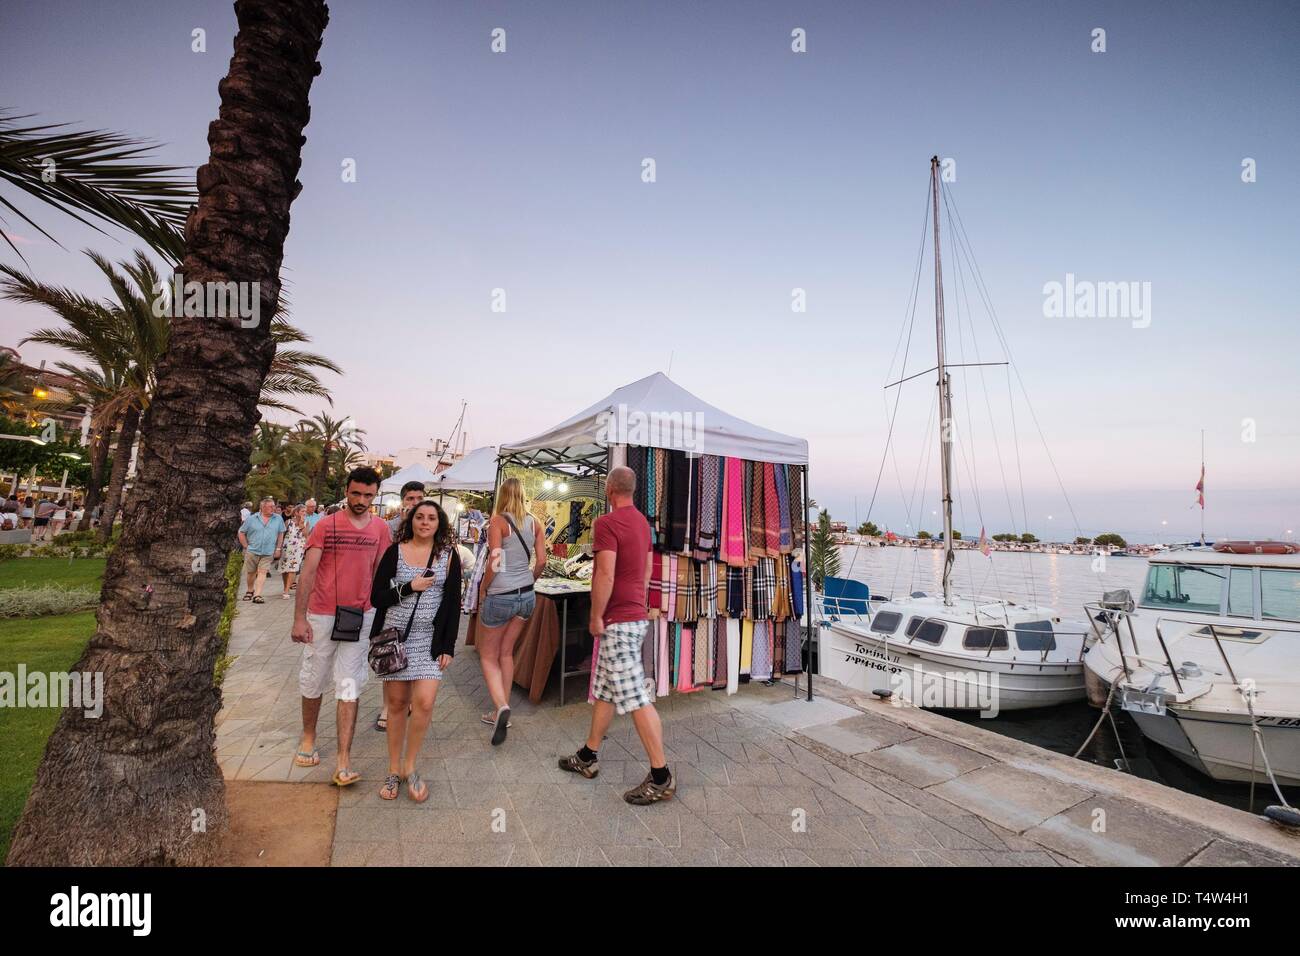 Mercadillo al aire libre, Port d'Alcudia, Mallorca, Islas Baleares, España. Foto de stock